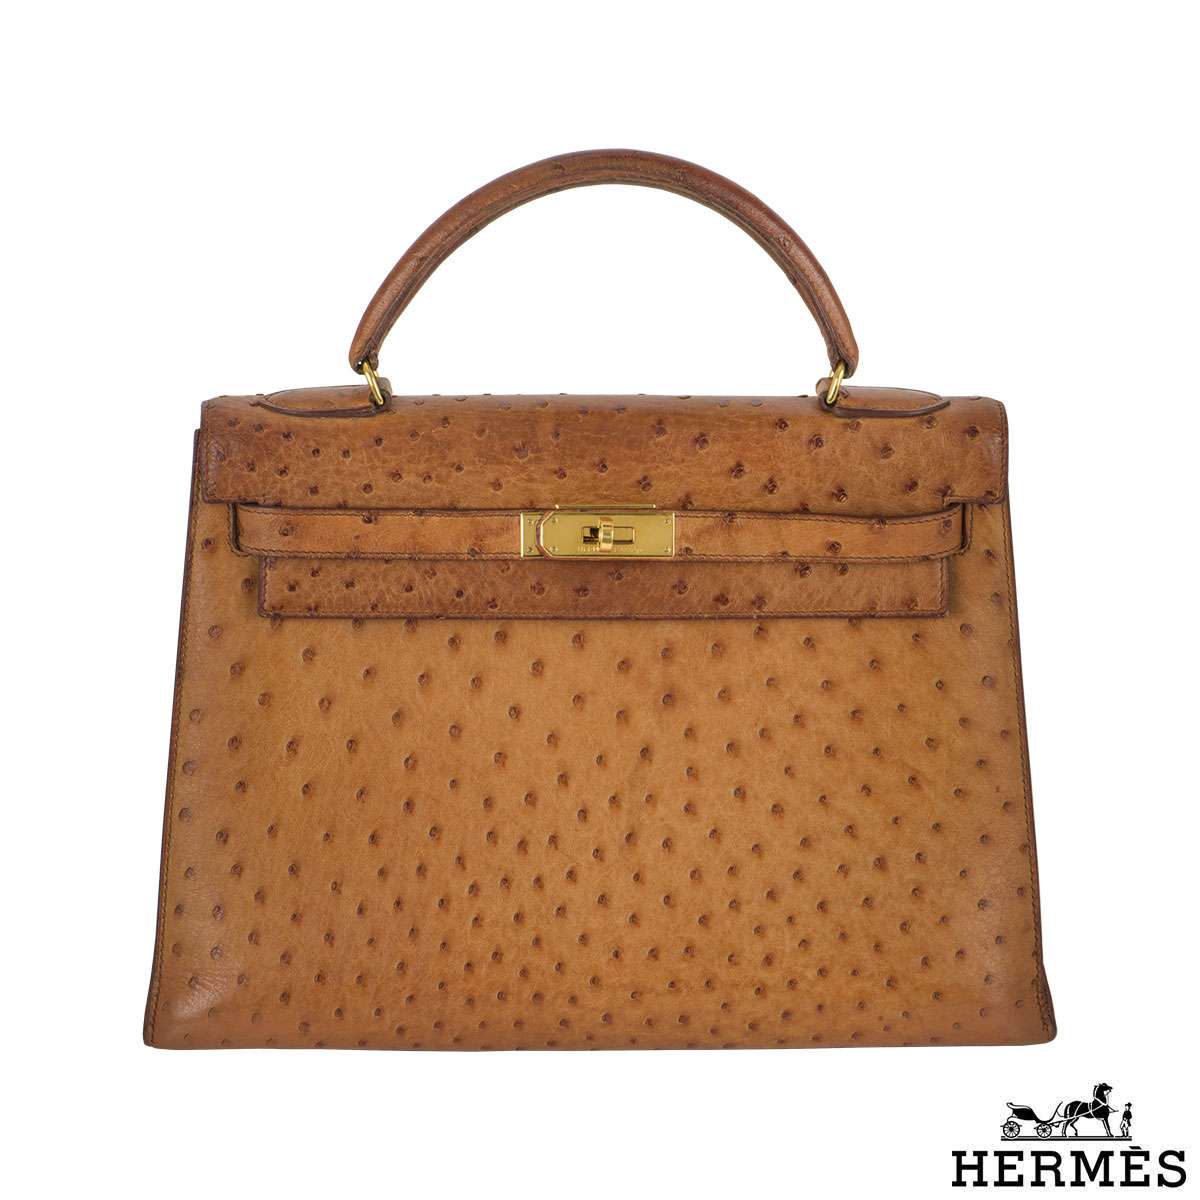 Vintage Hermes Kelly bag with canvas strap  Vintage kelly bag, Vintage  hermes bag, Kelly bag